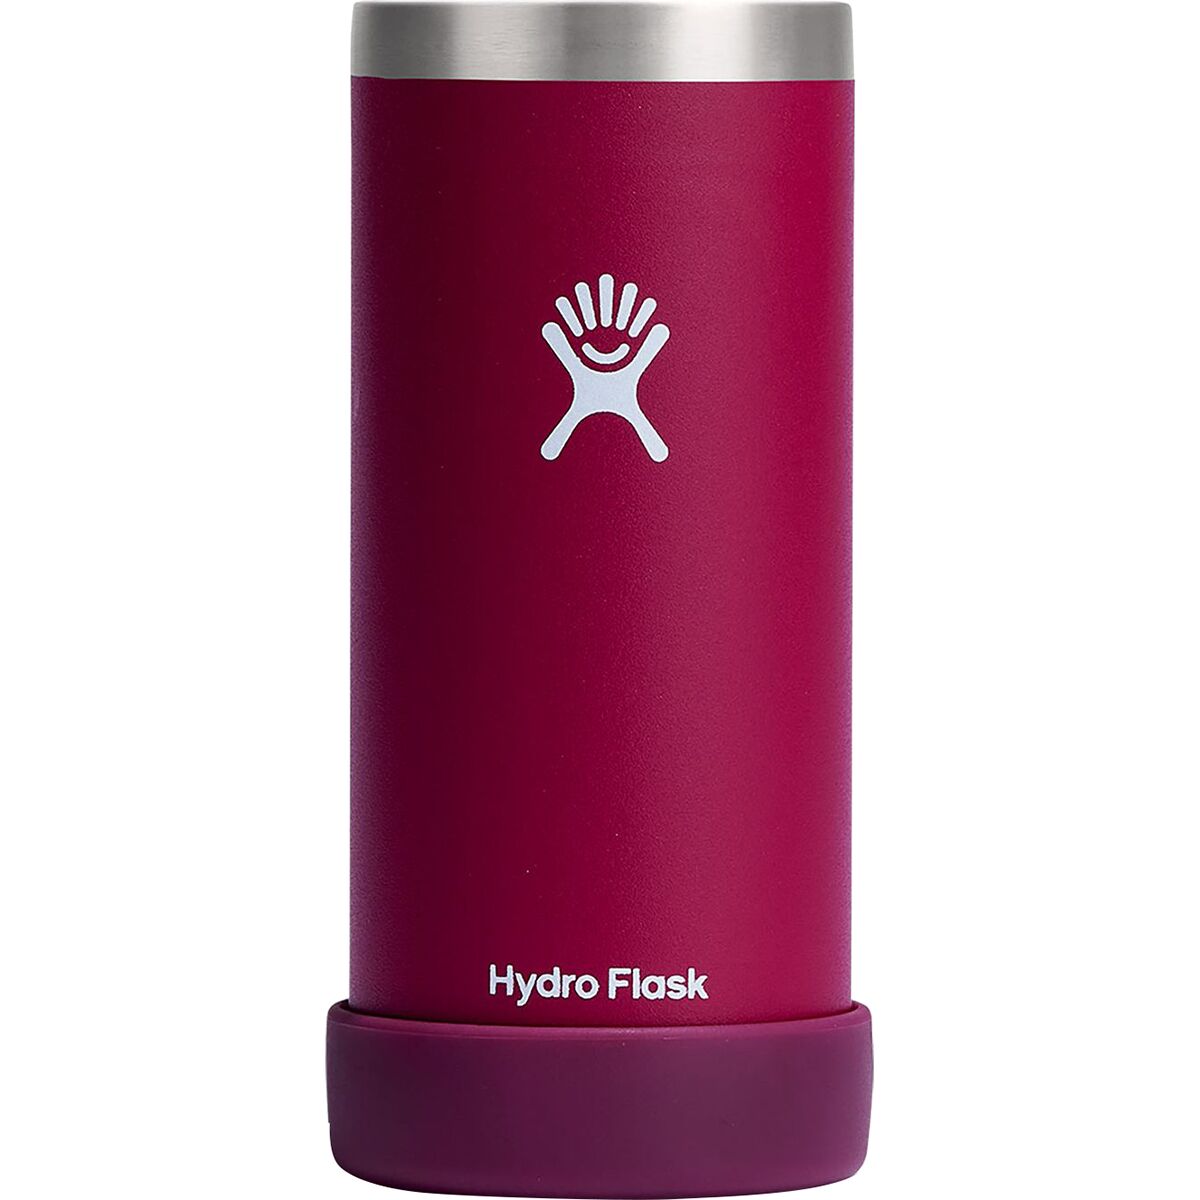 Hydro Flask Slim Cooler Cup - 12 fl. oz.